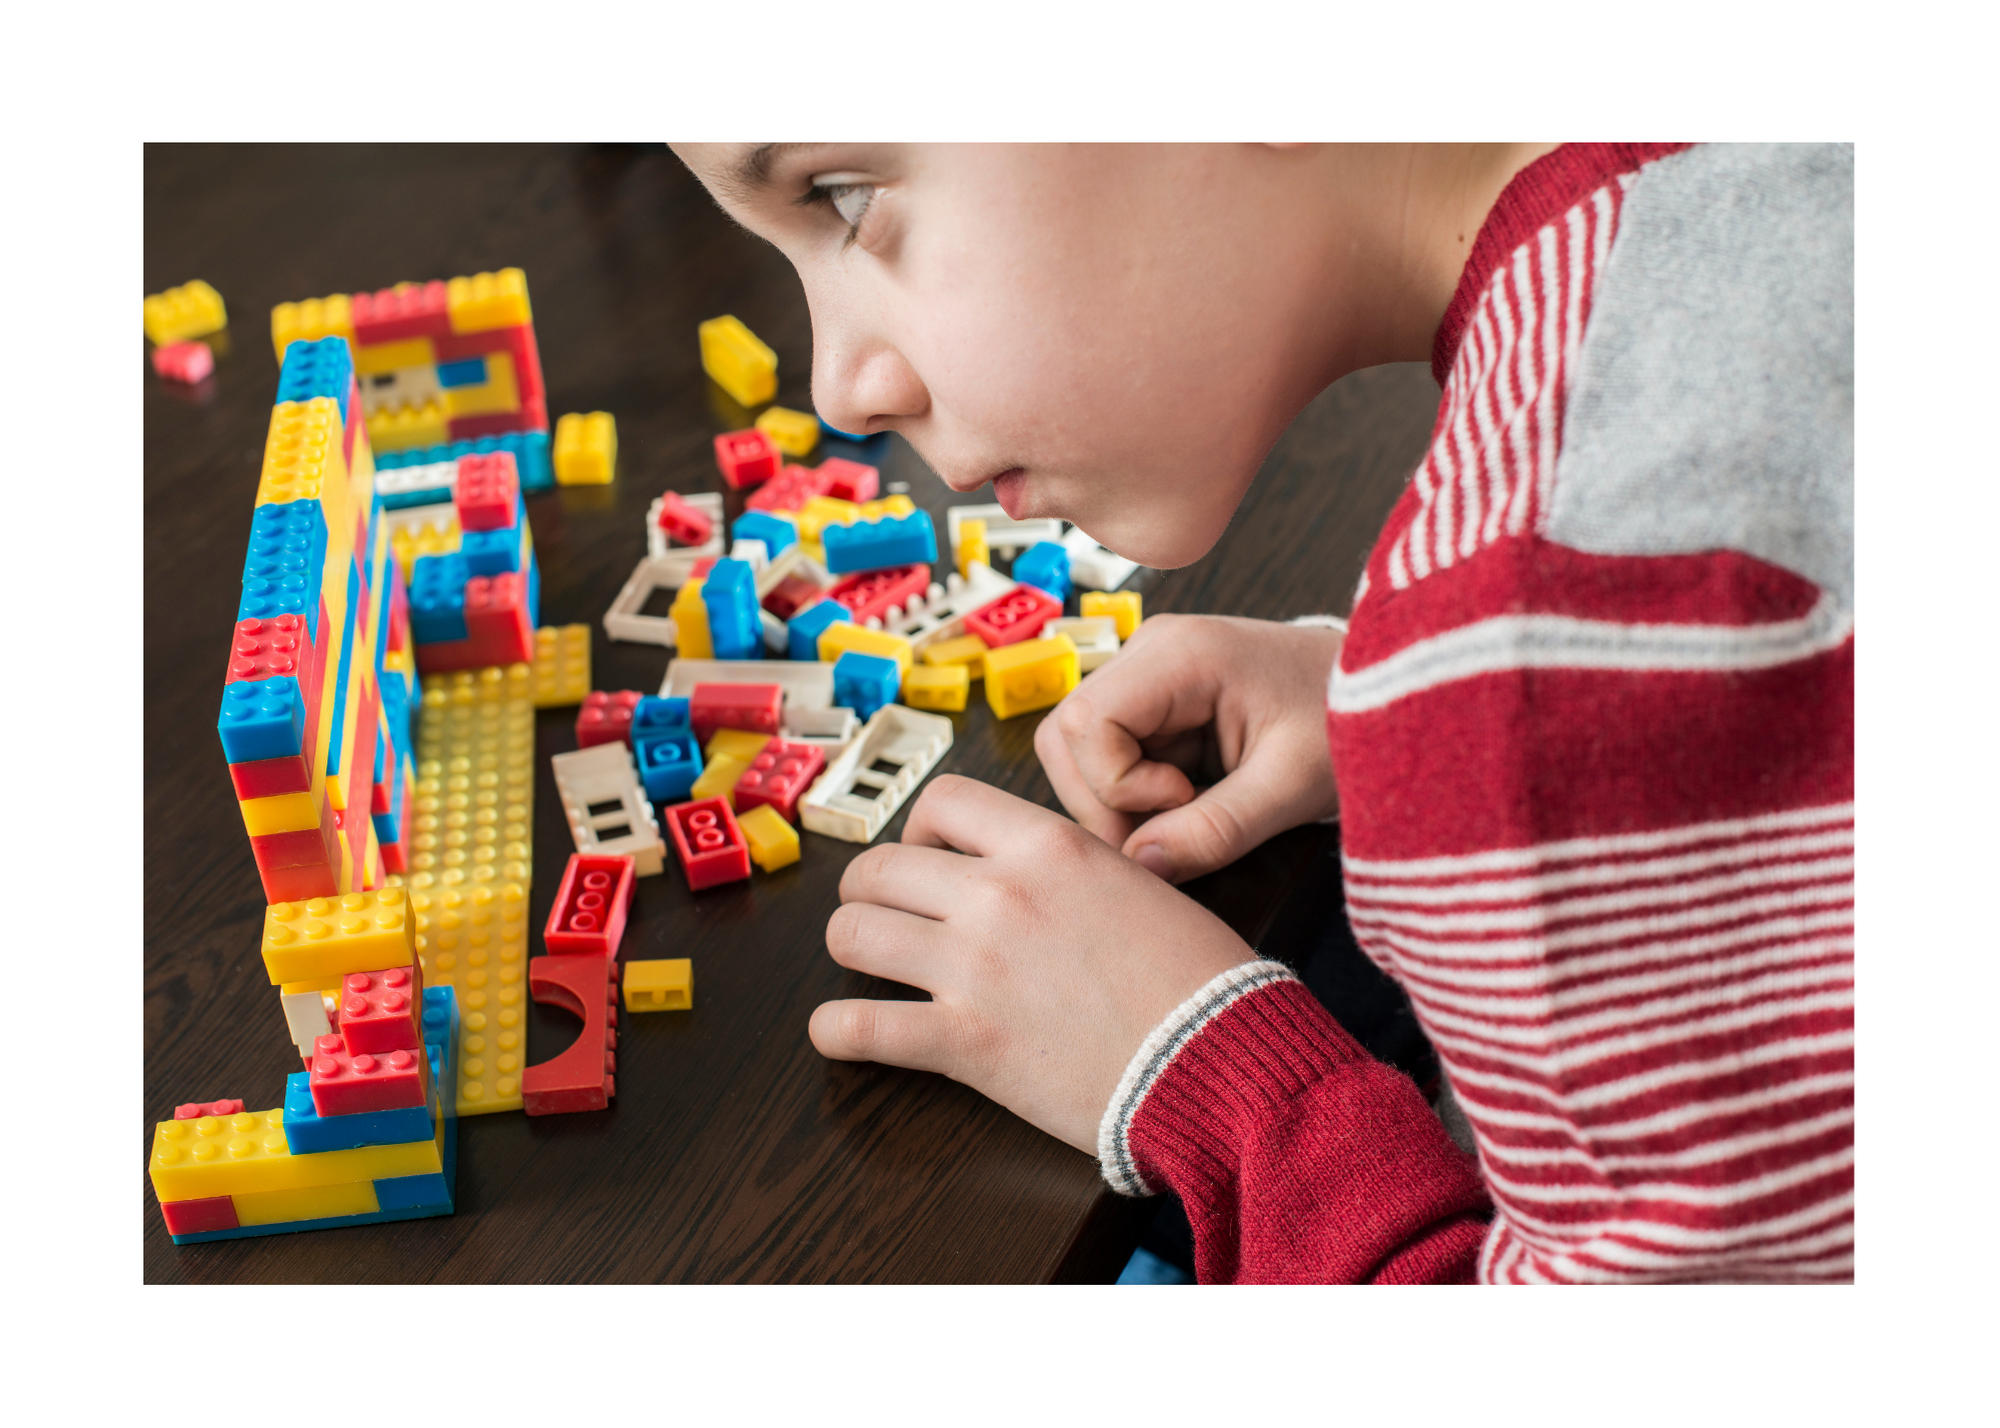 Child building with LEGO bricks.